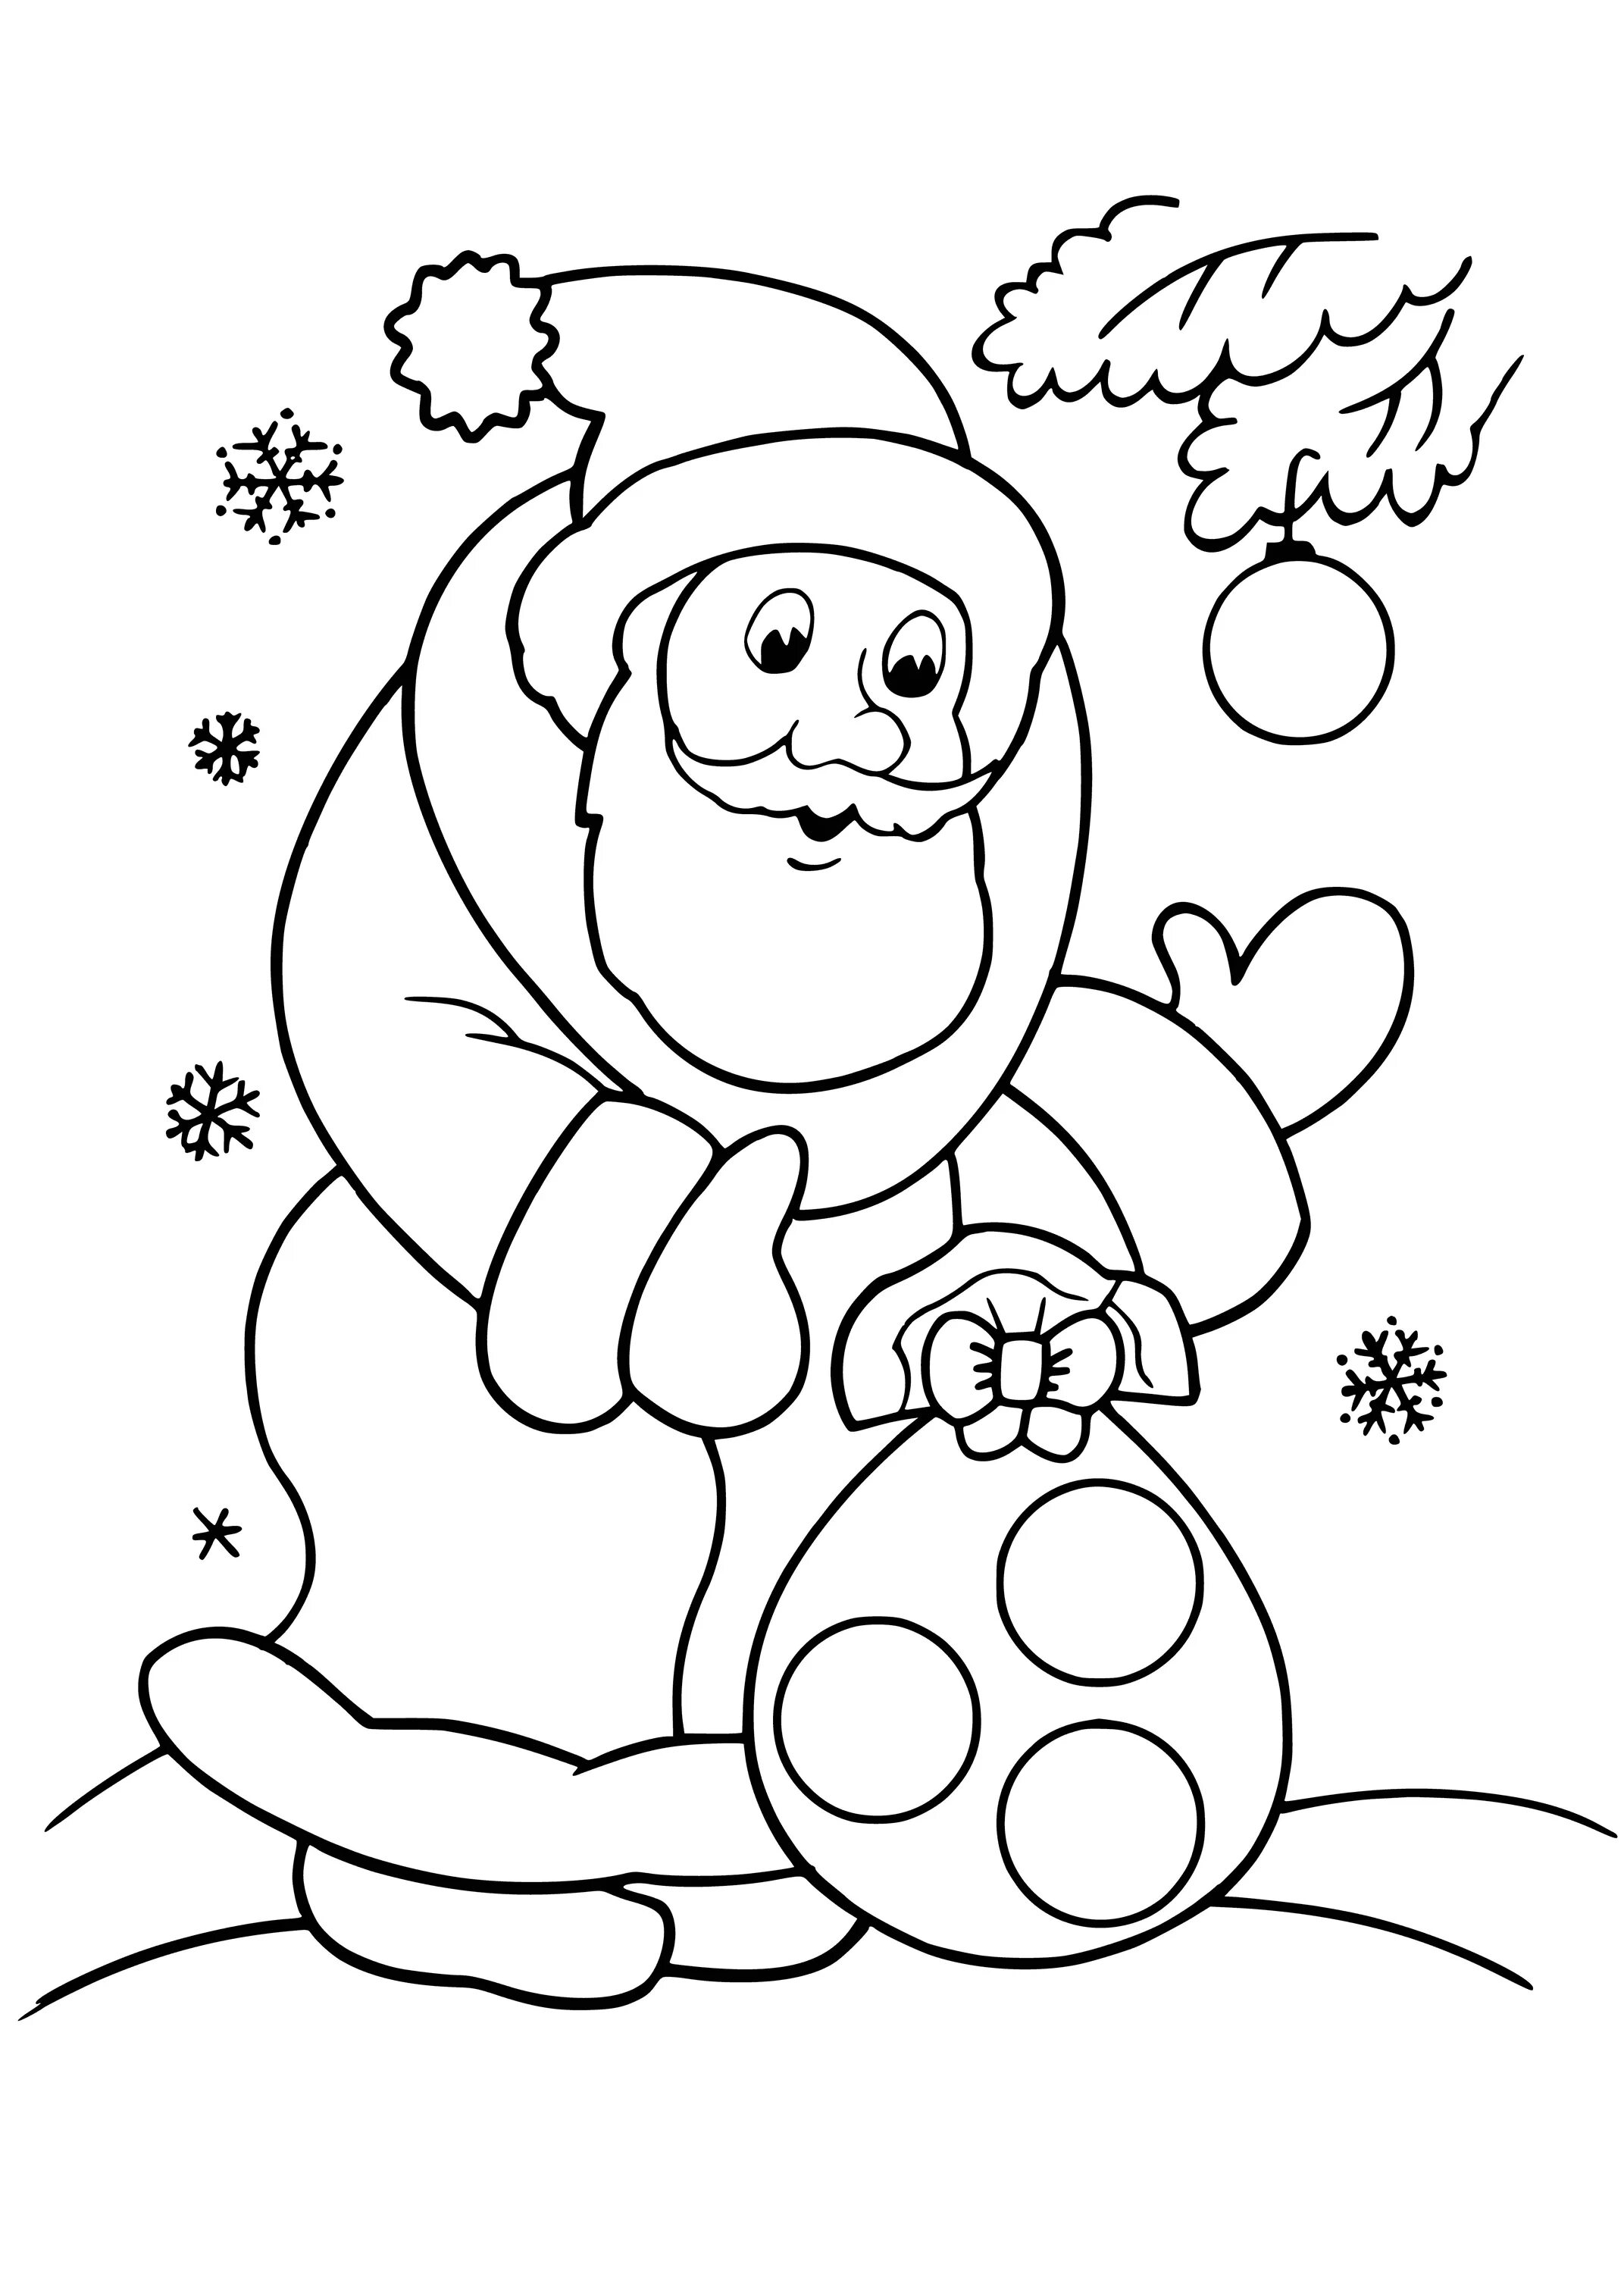 Exciting Santa Claus coloring book